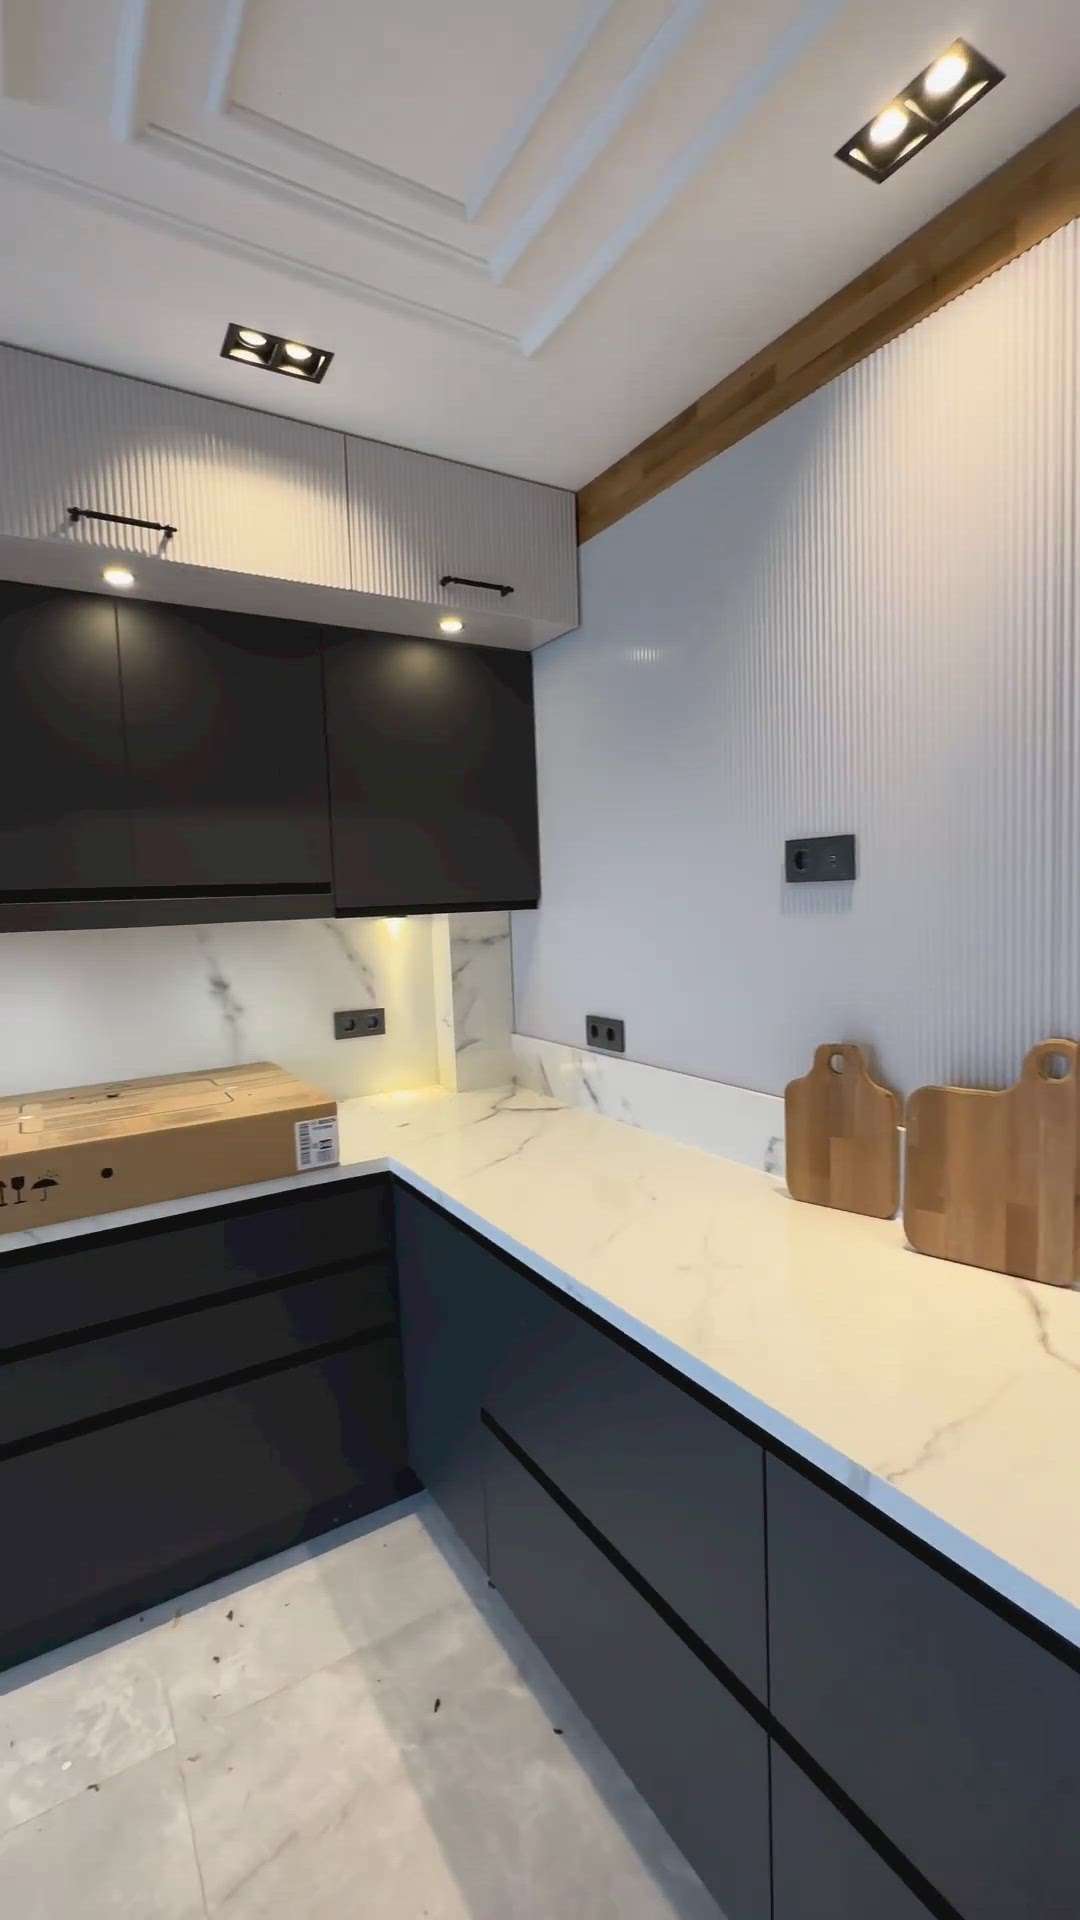 Modular Kitchen Design ✨

Opal Construction & Interior

Contact - 8319099875

#HouseRenovation #renovations #InteriorDesigner #KitchenInterior #WalkInWardrobe #MasterBedroom #BedroomDecor  #ModularKitchen  #Modularfurniture